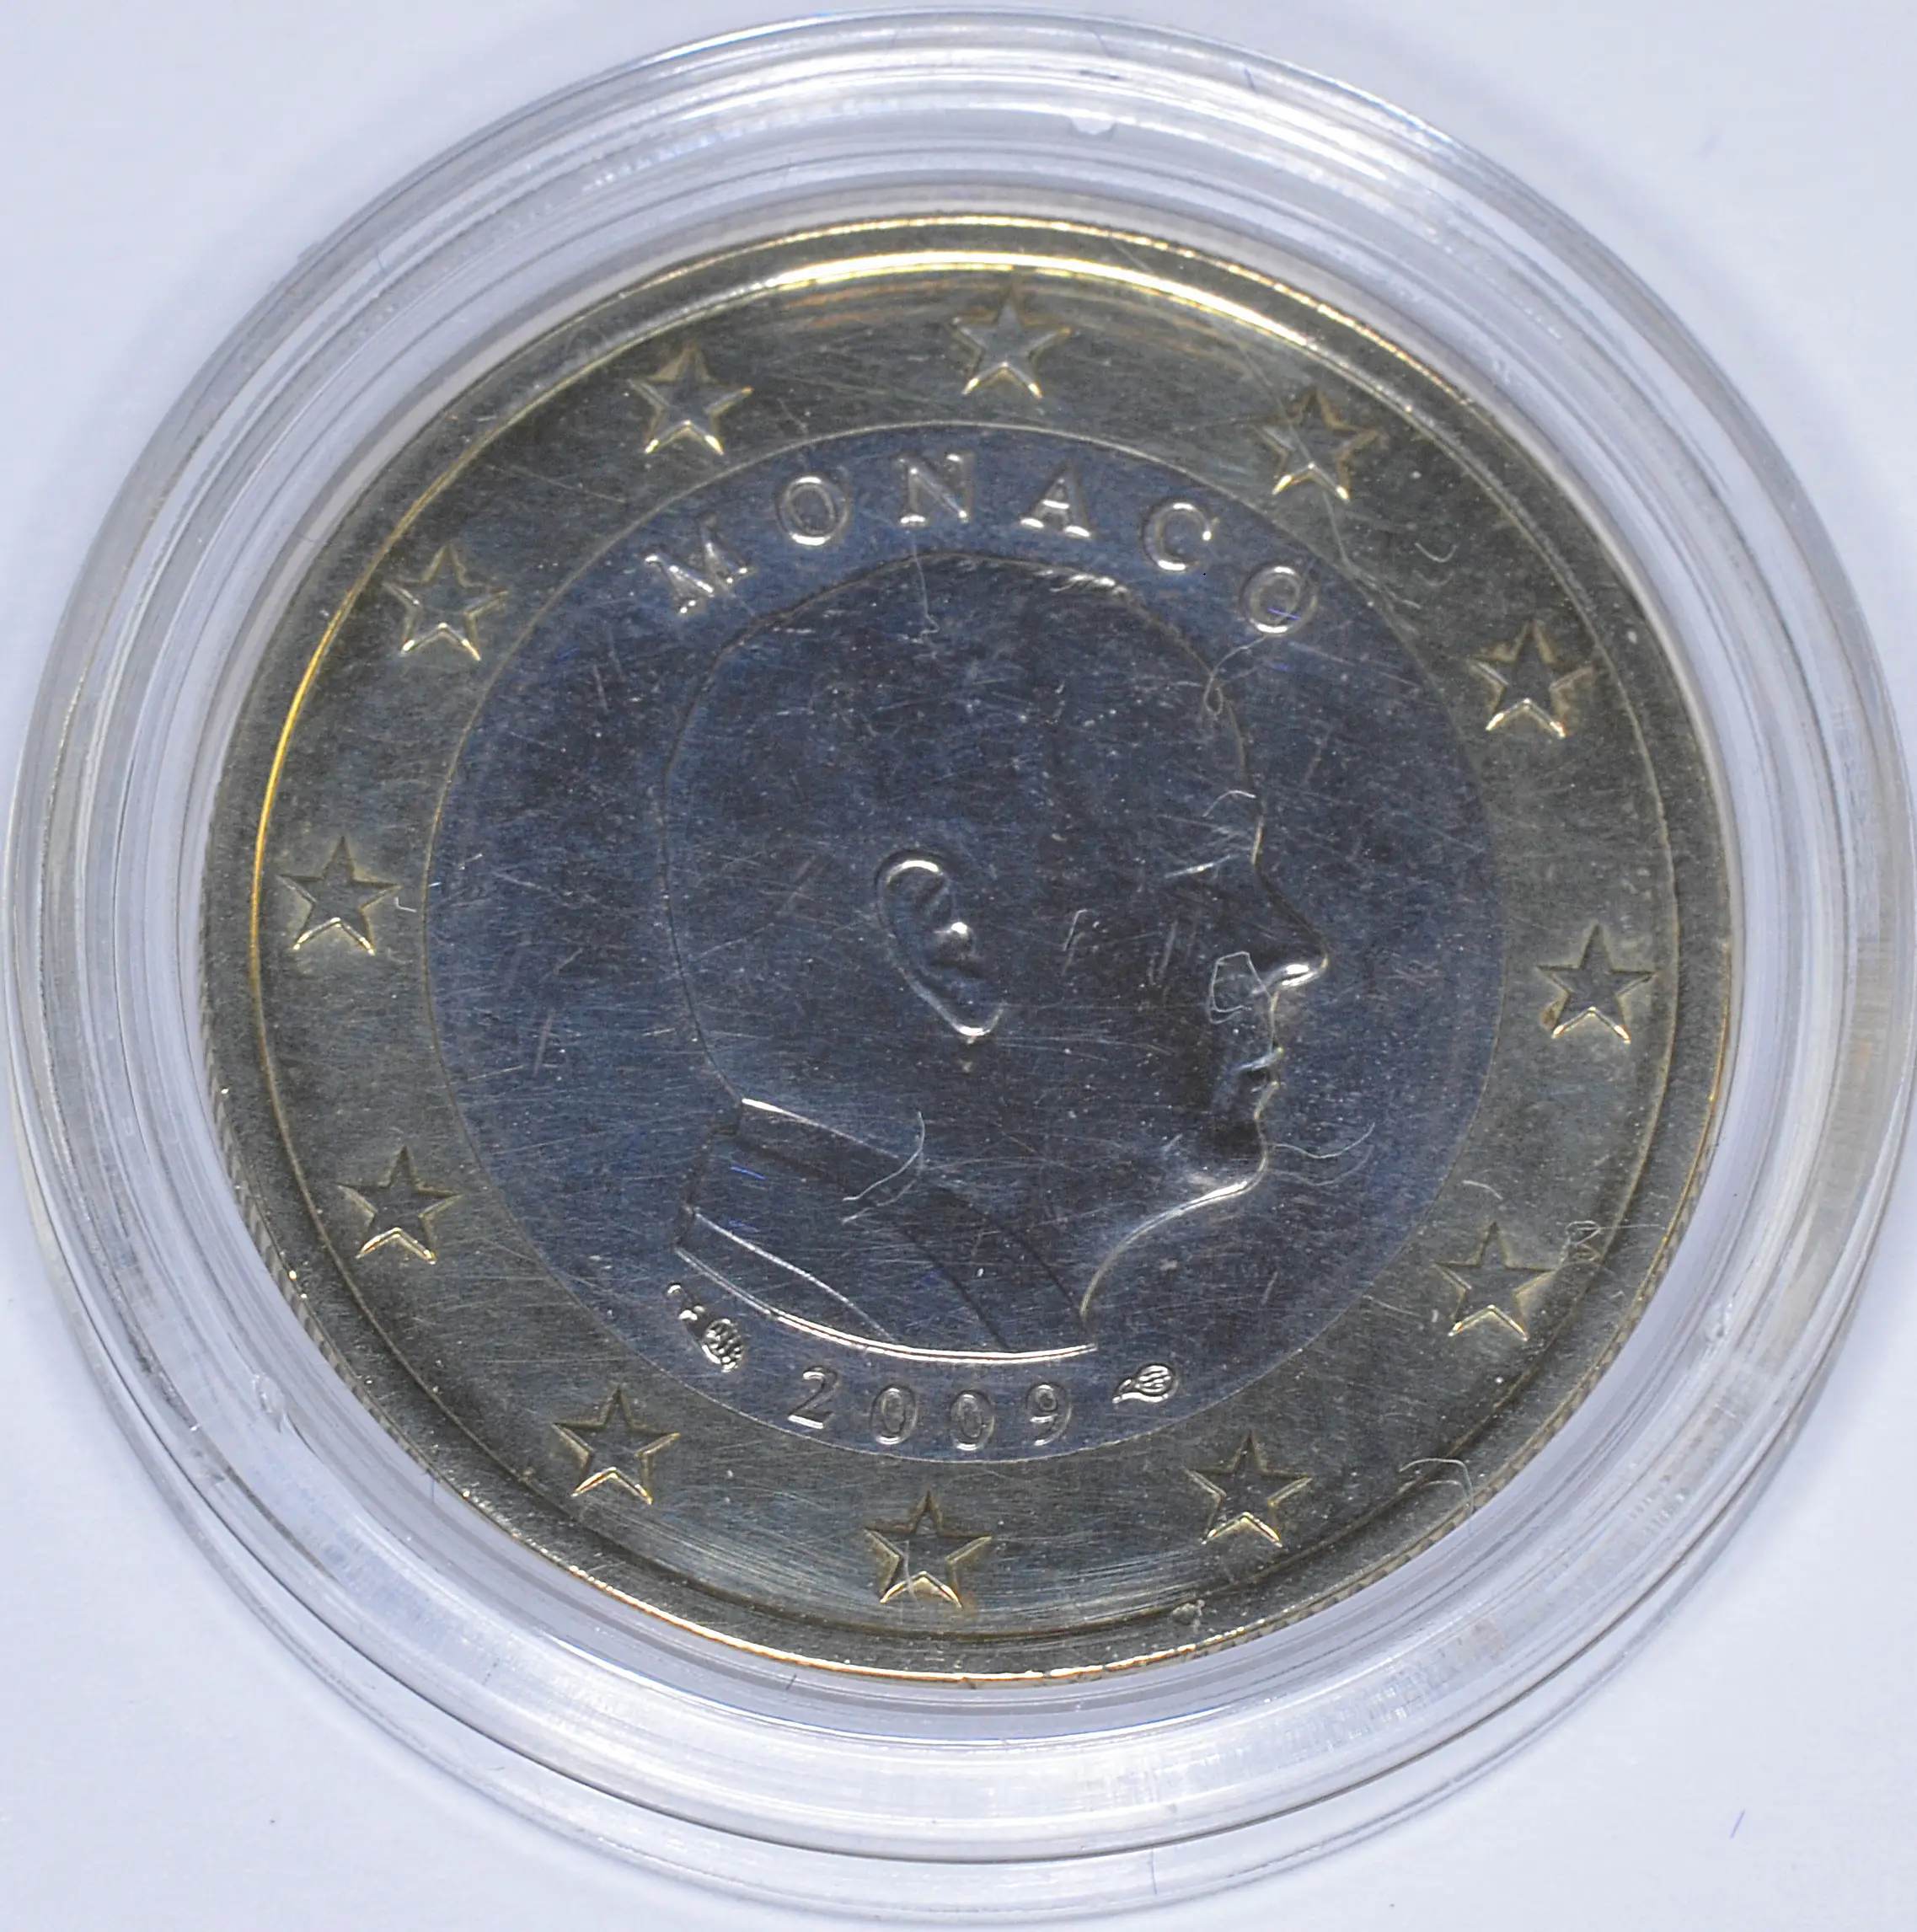 Monaco 1 Euro Münze 2009 - euro-muenzen.tv - Der Online Euromünzen Katalog